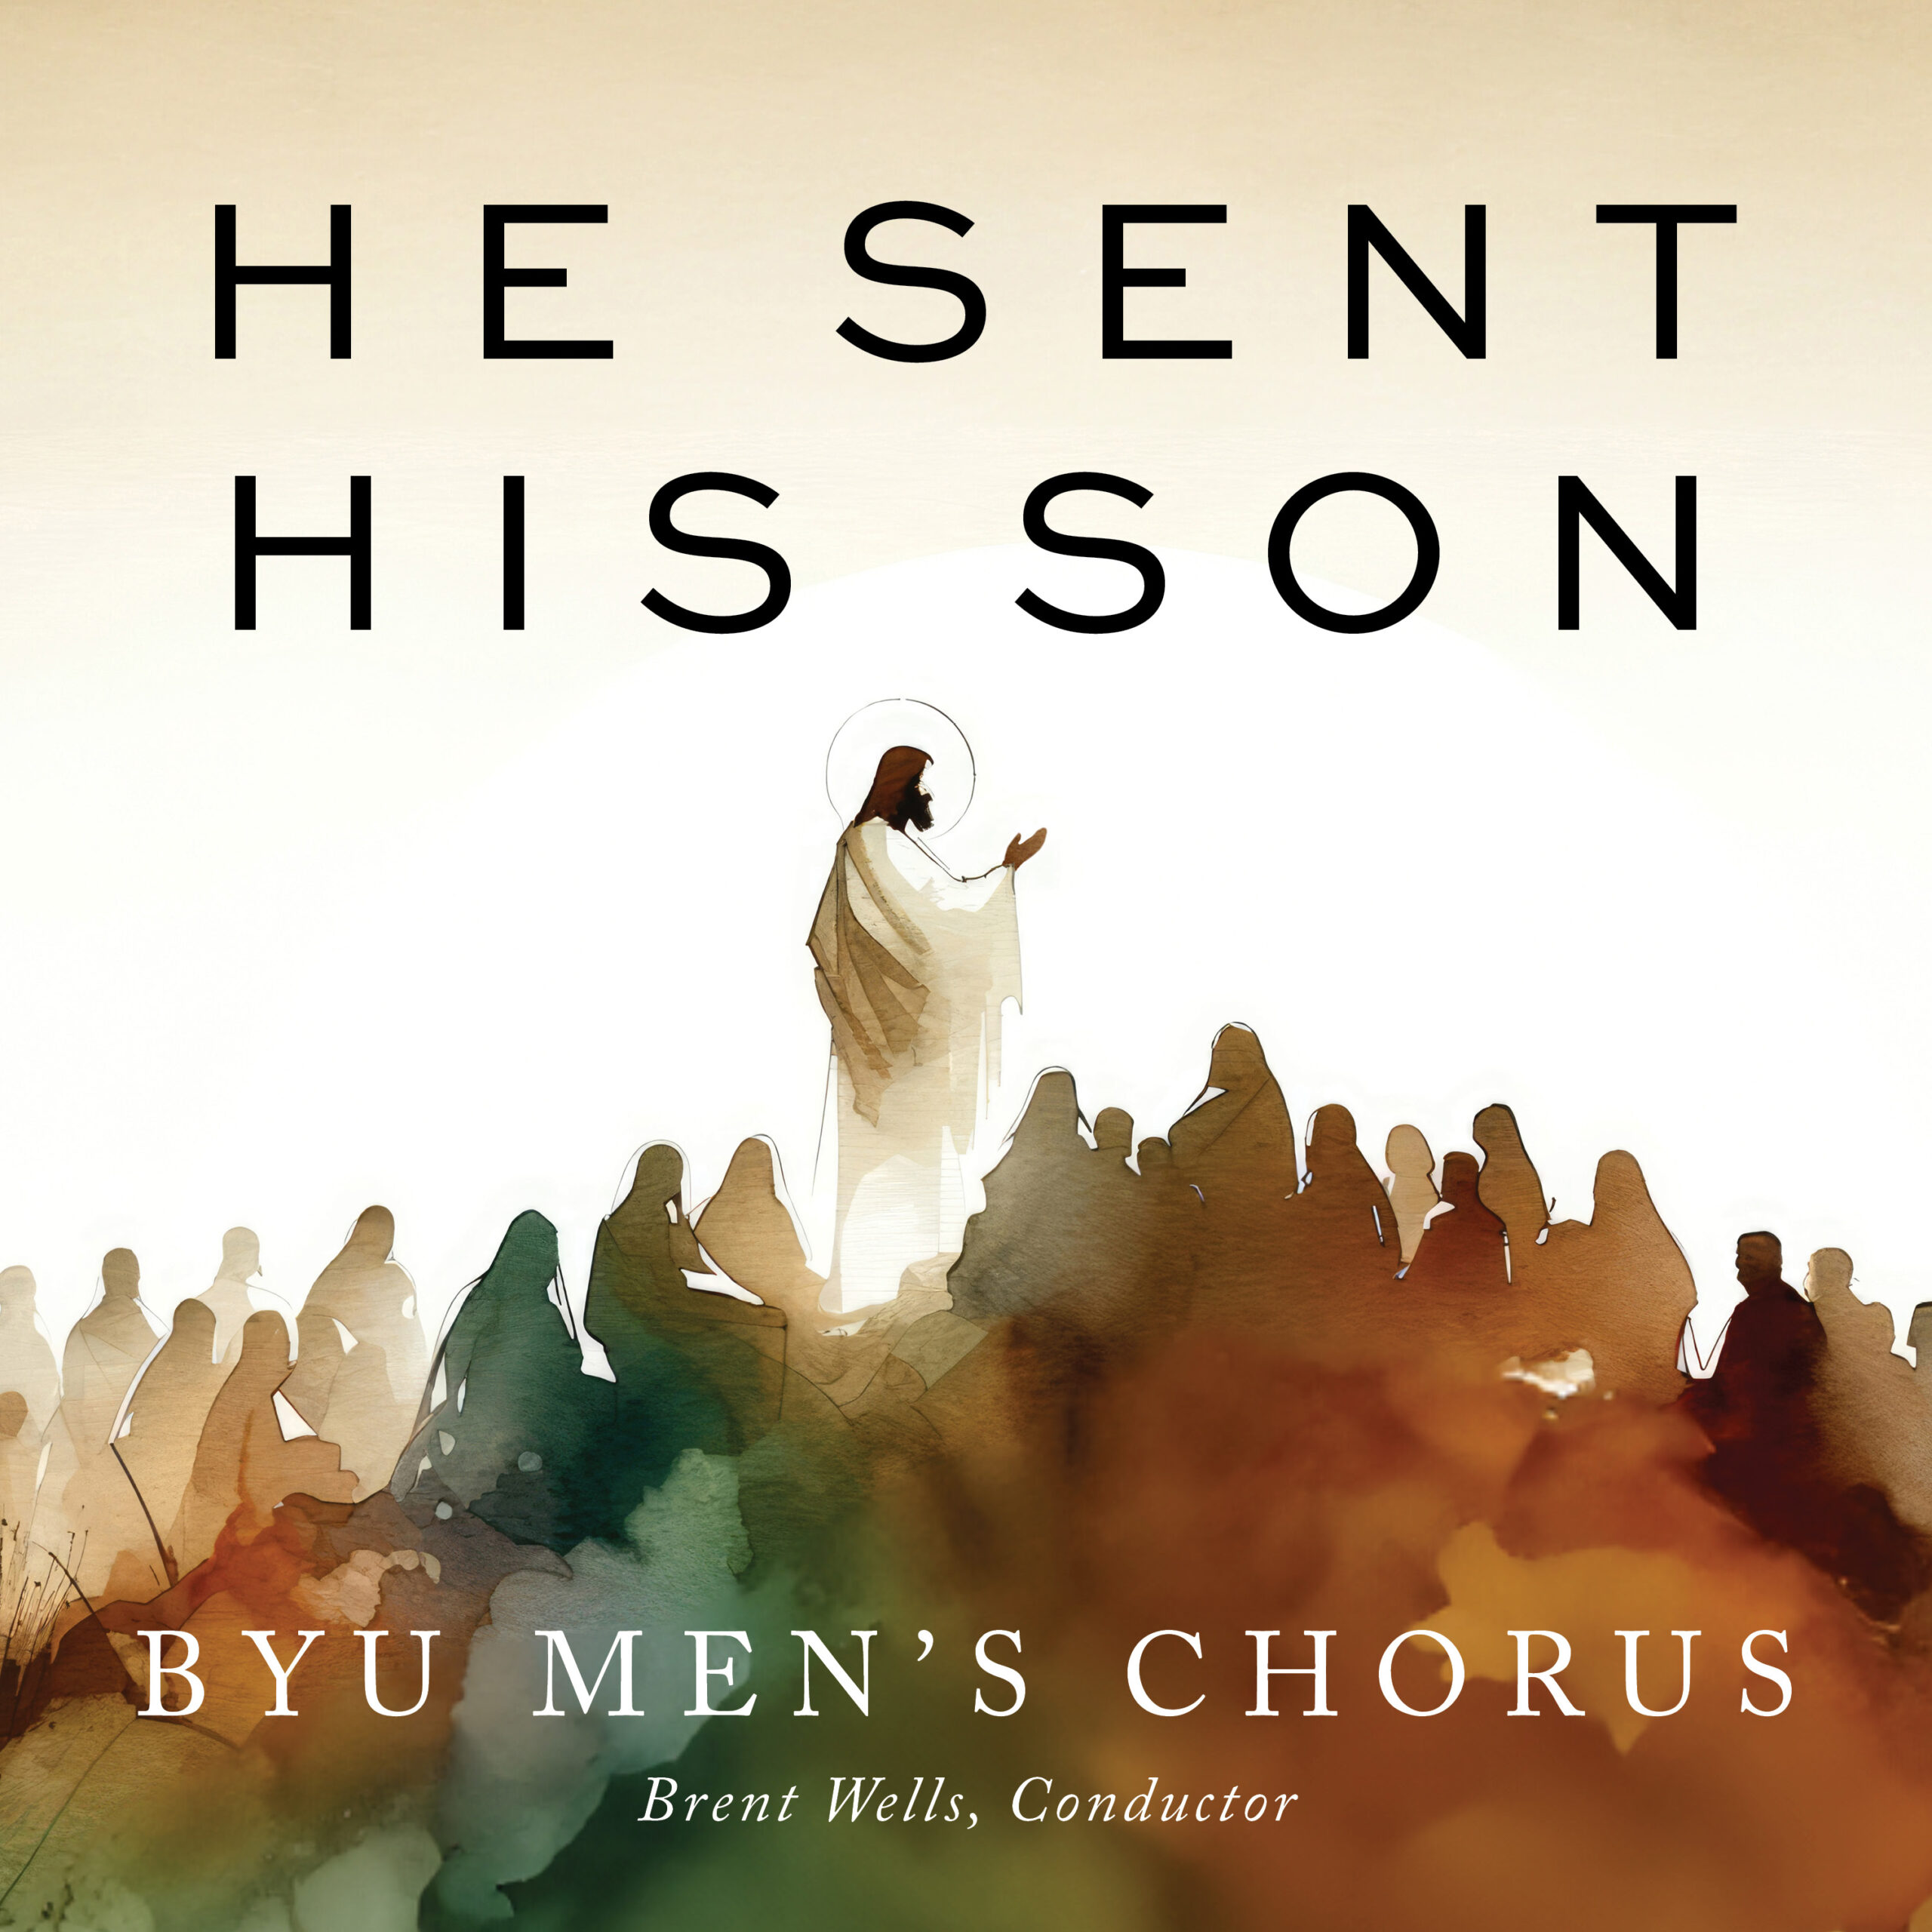 BYU Men's Chorus Shares Faith-Filled EP “He Sent His Son”